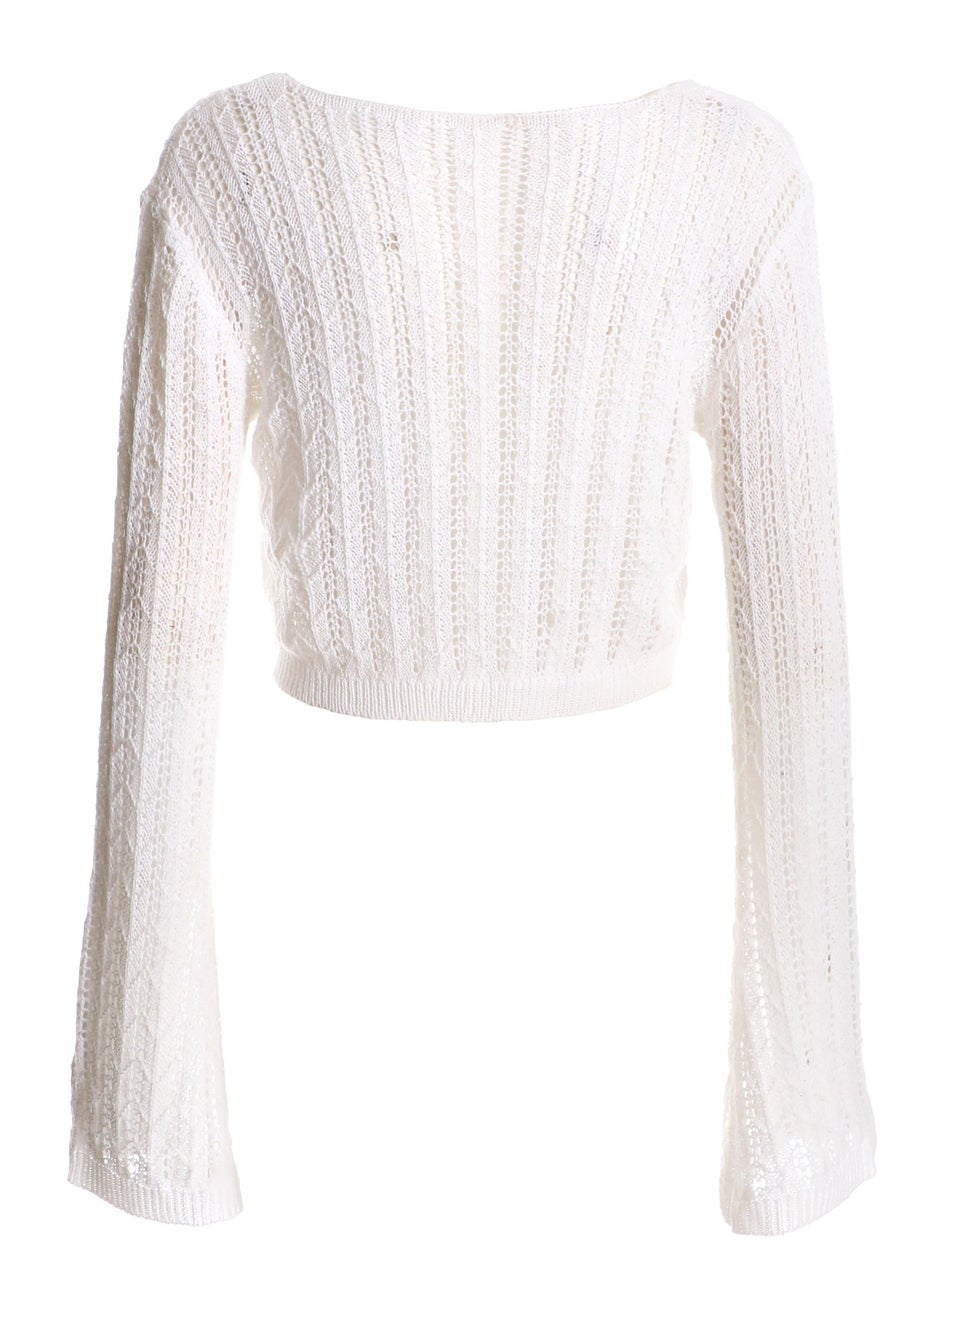 Quiz White Crochet Cropped Cardigan